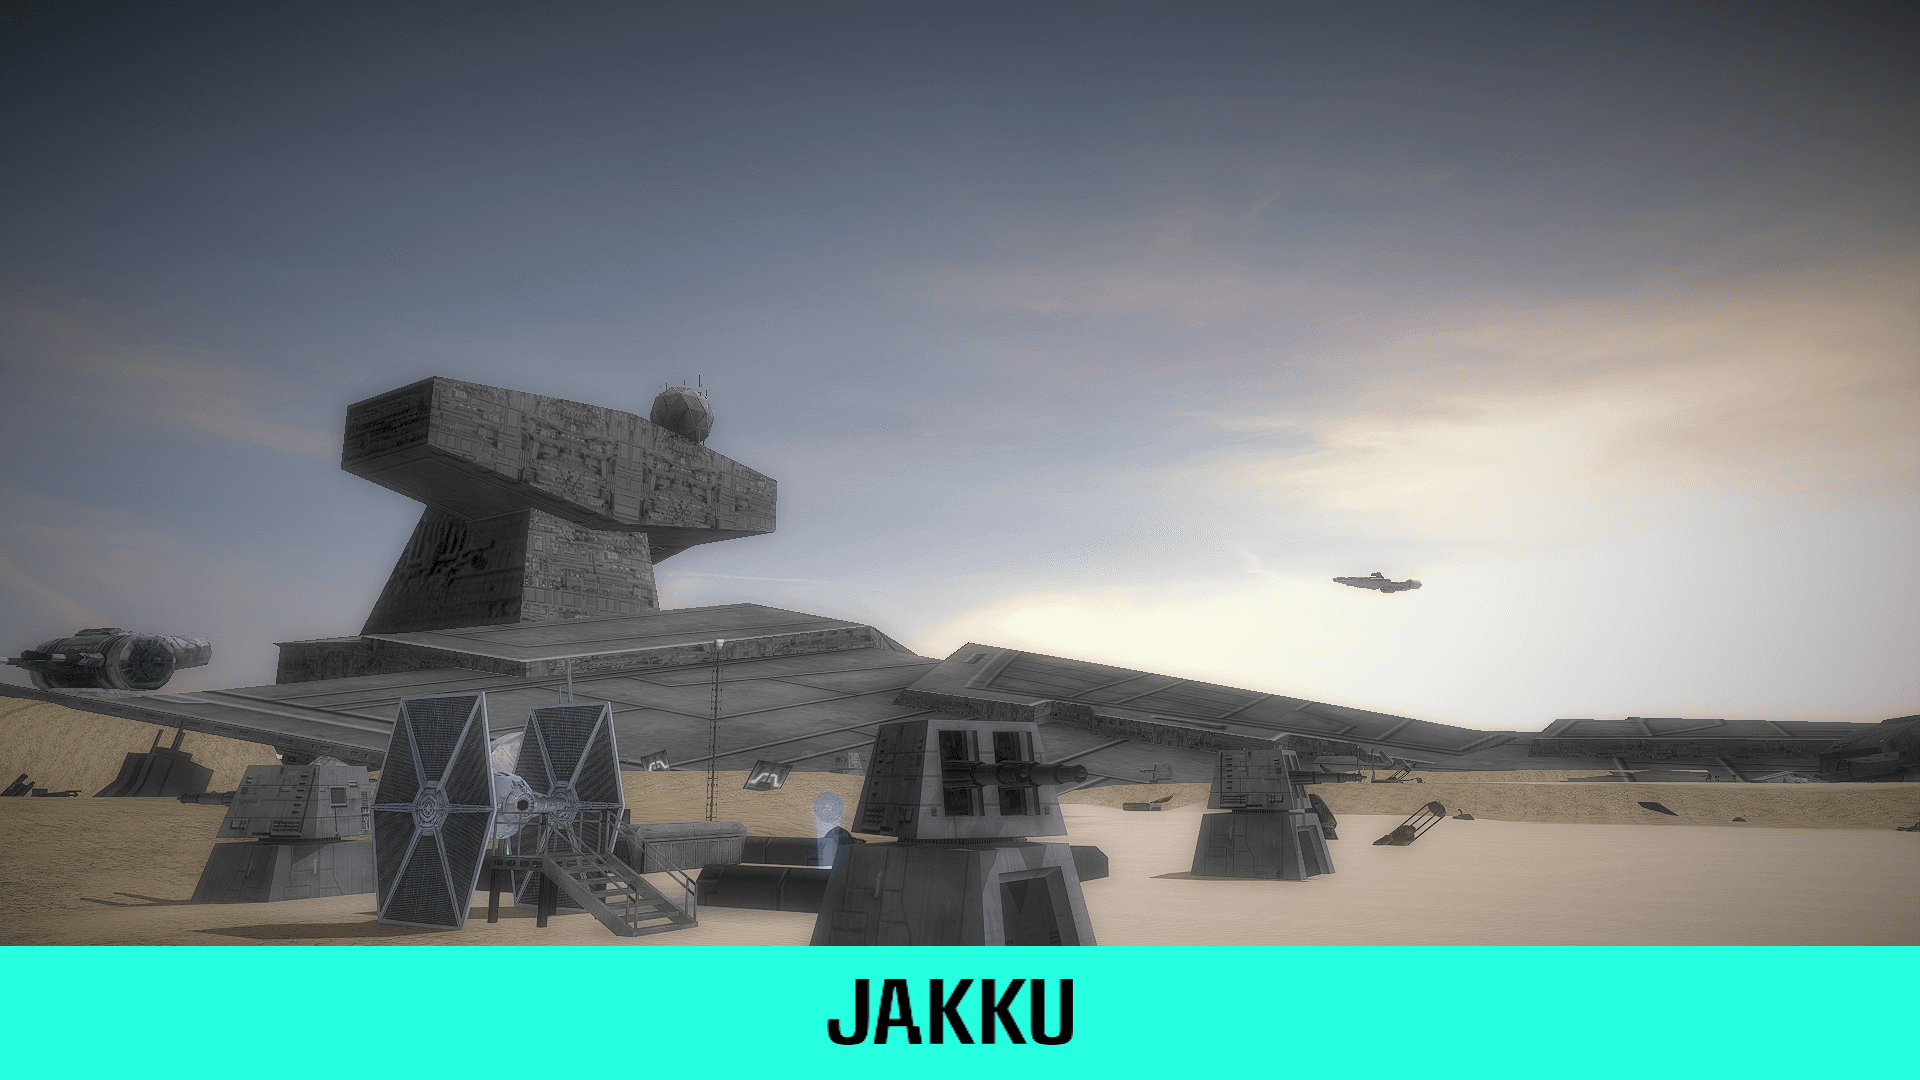 The Battle of Jakku - a major turning point in galactic history Wallpaper